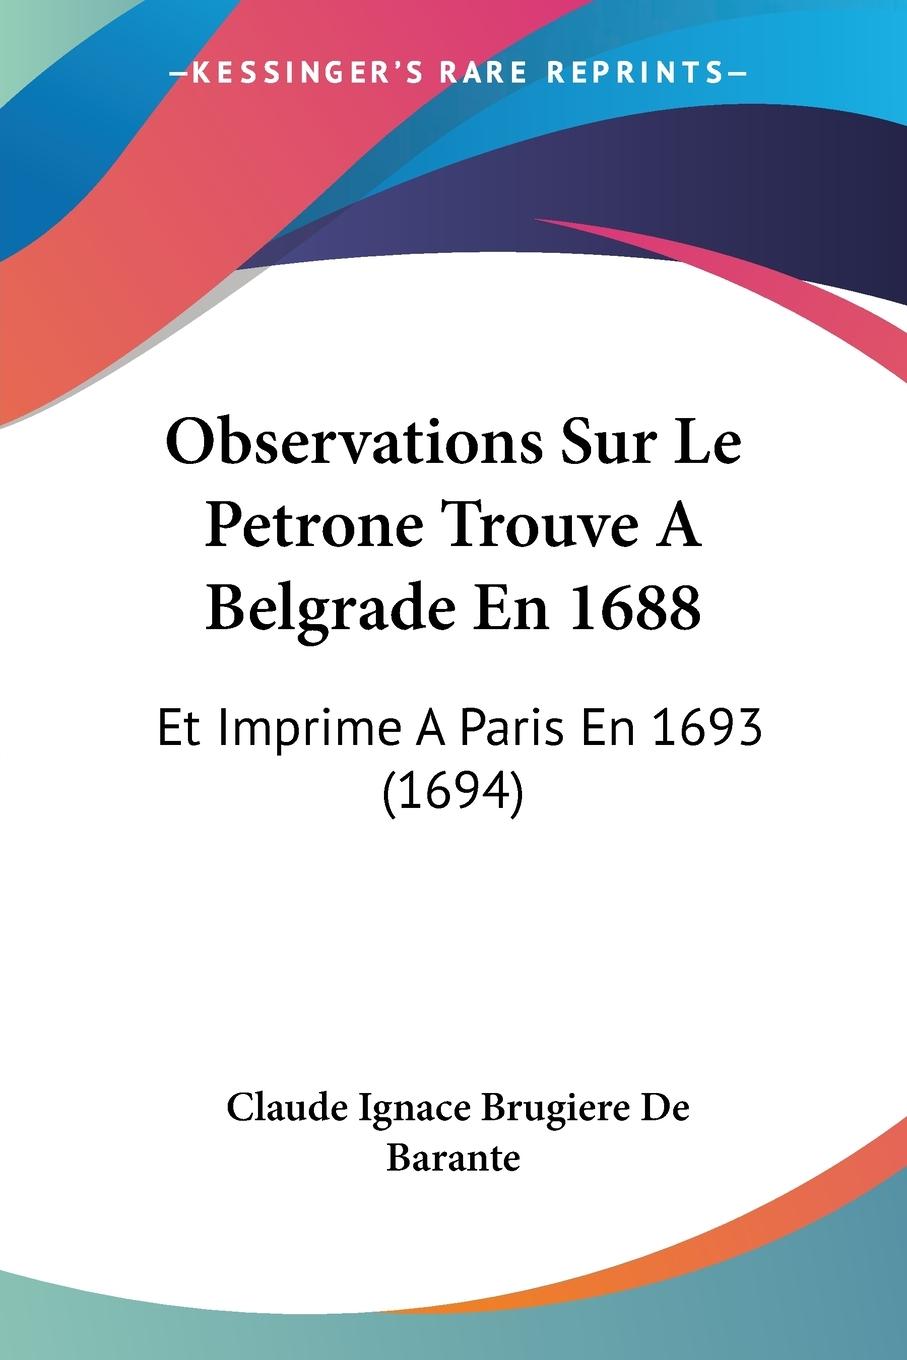 Observations Sur Le Petrone Trouve A Belgrade En 1688 - Barante, Claude Ignace Brugiere De